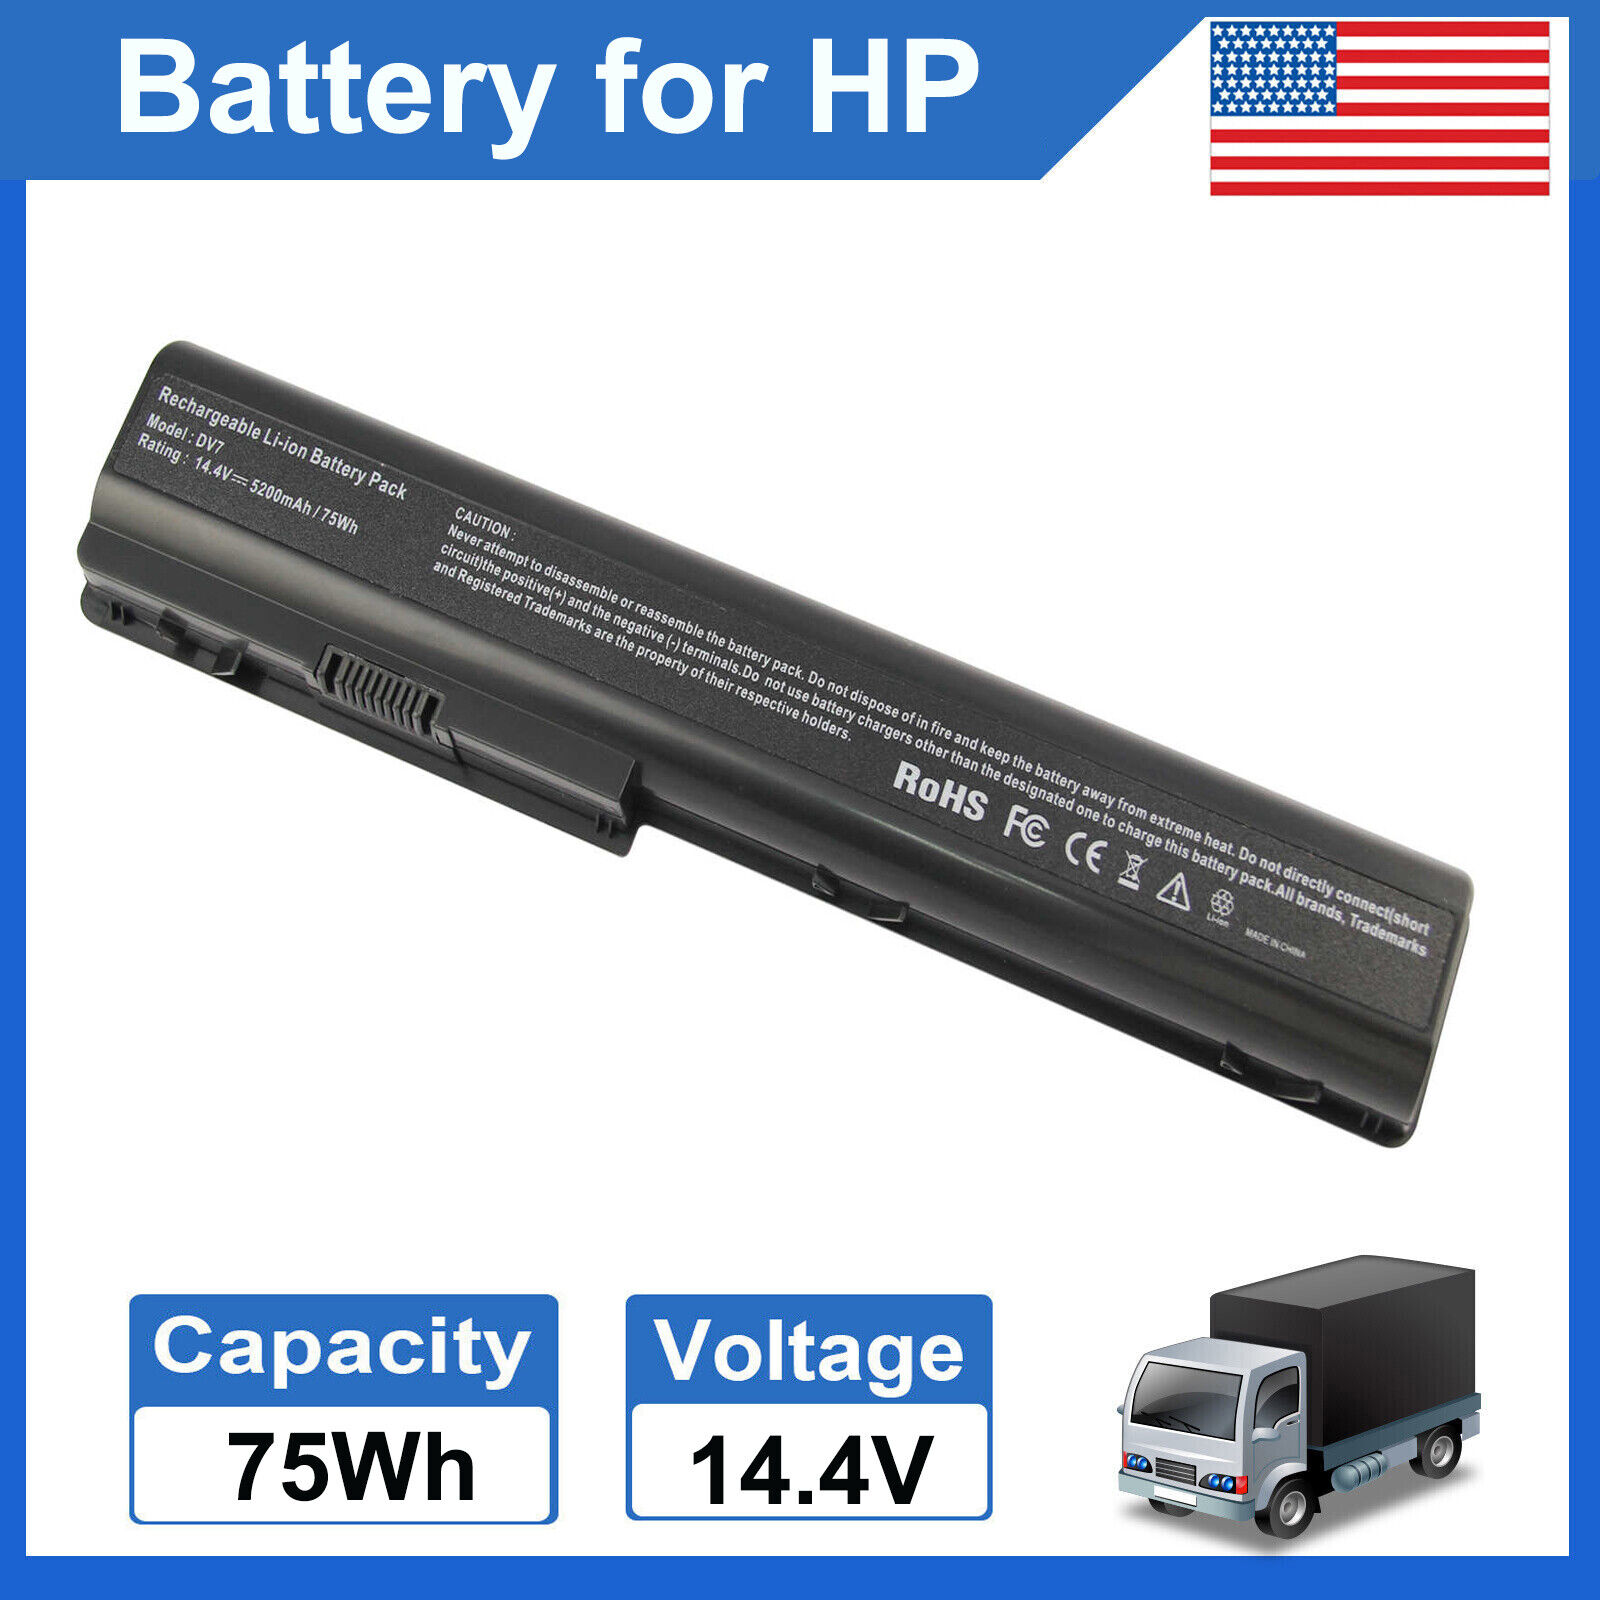 Battery for HP Pavilion DV7-1000 DV7-1010 DV8-1000 HDX18 HSTNN-DB75 HSTNN-IB74